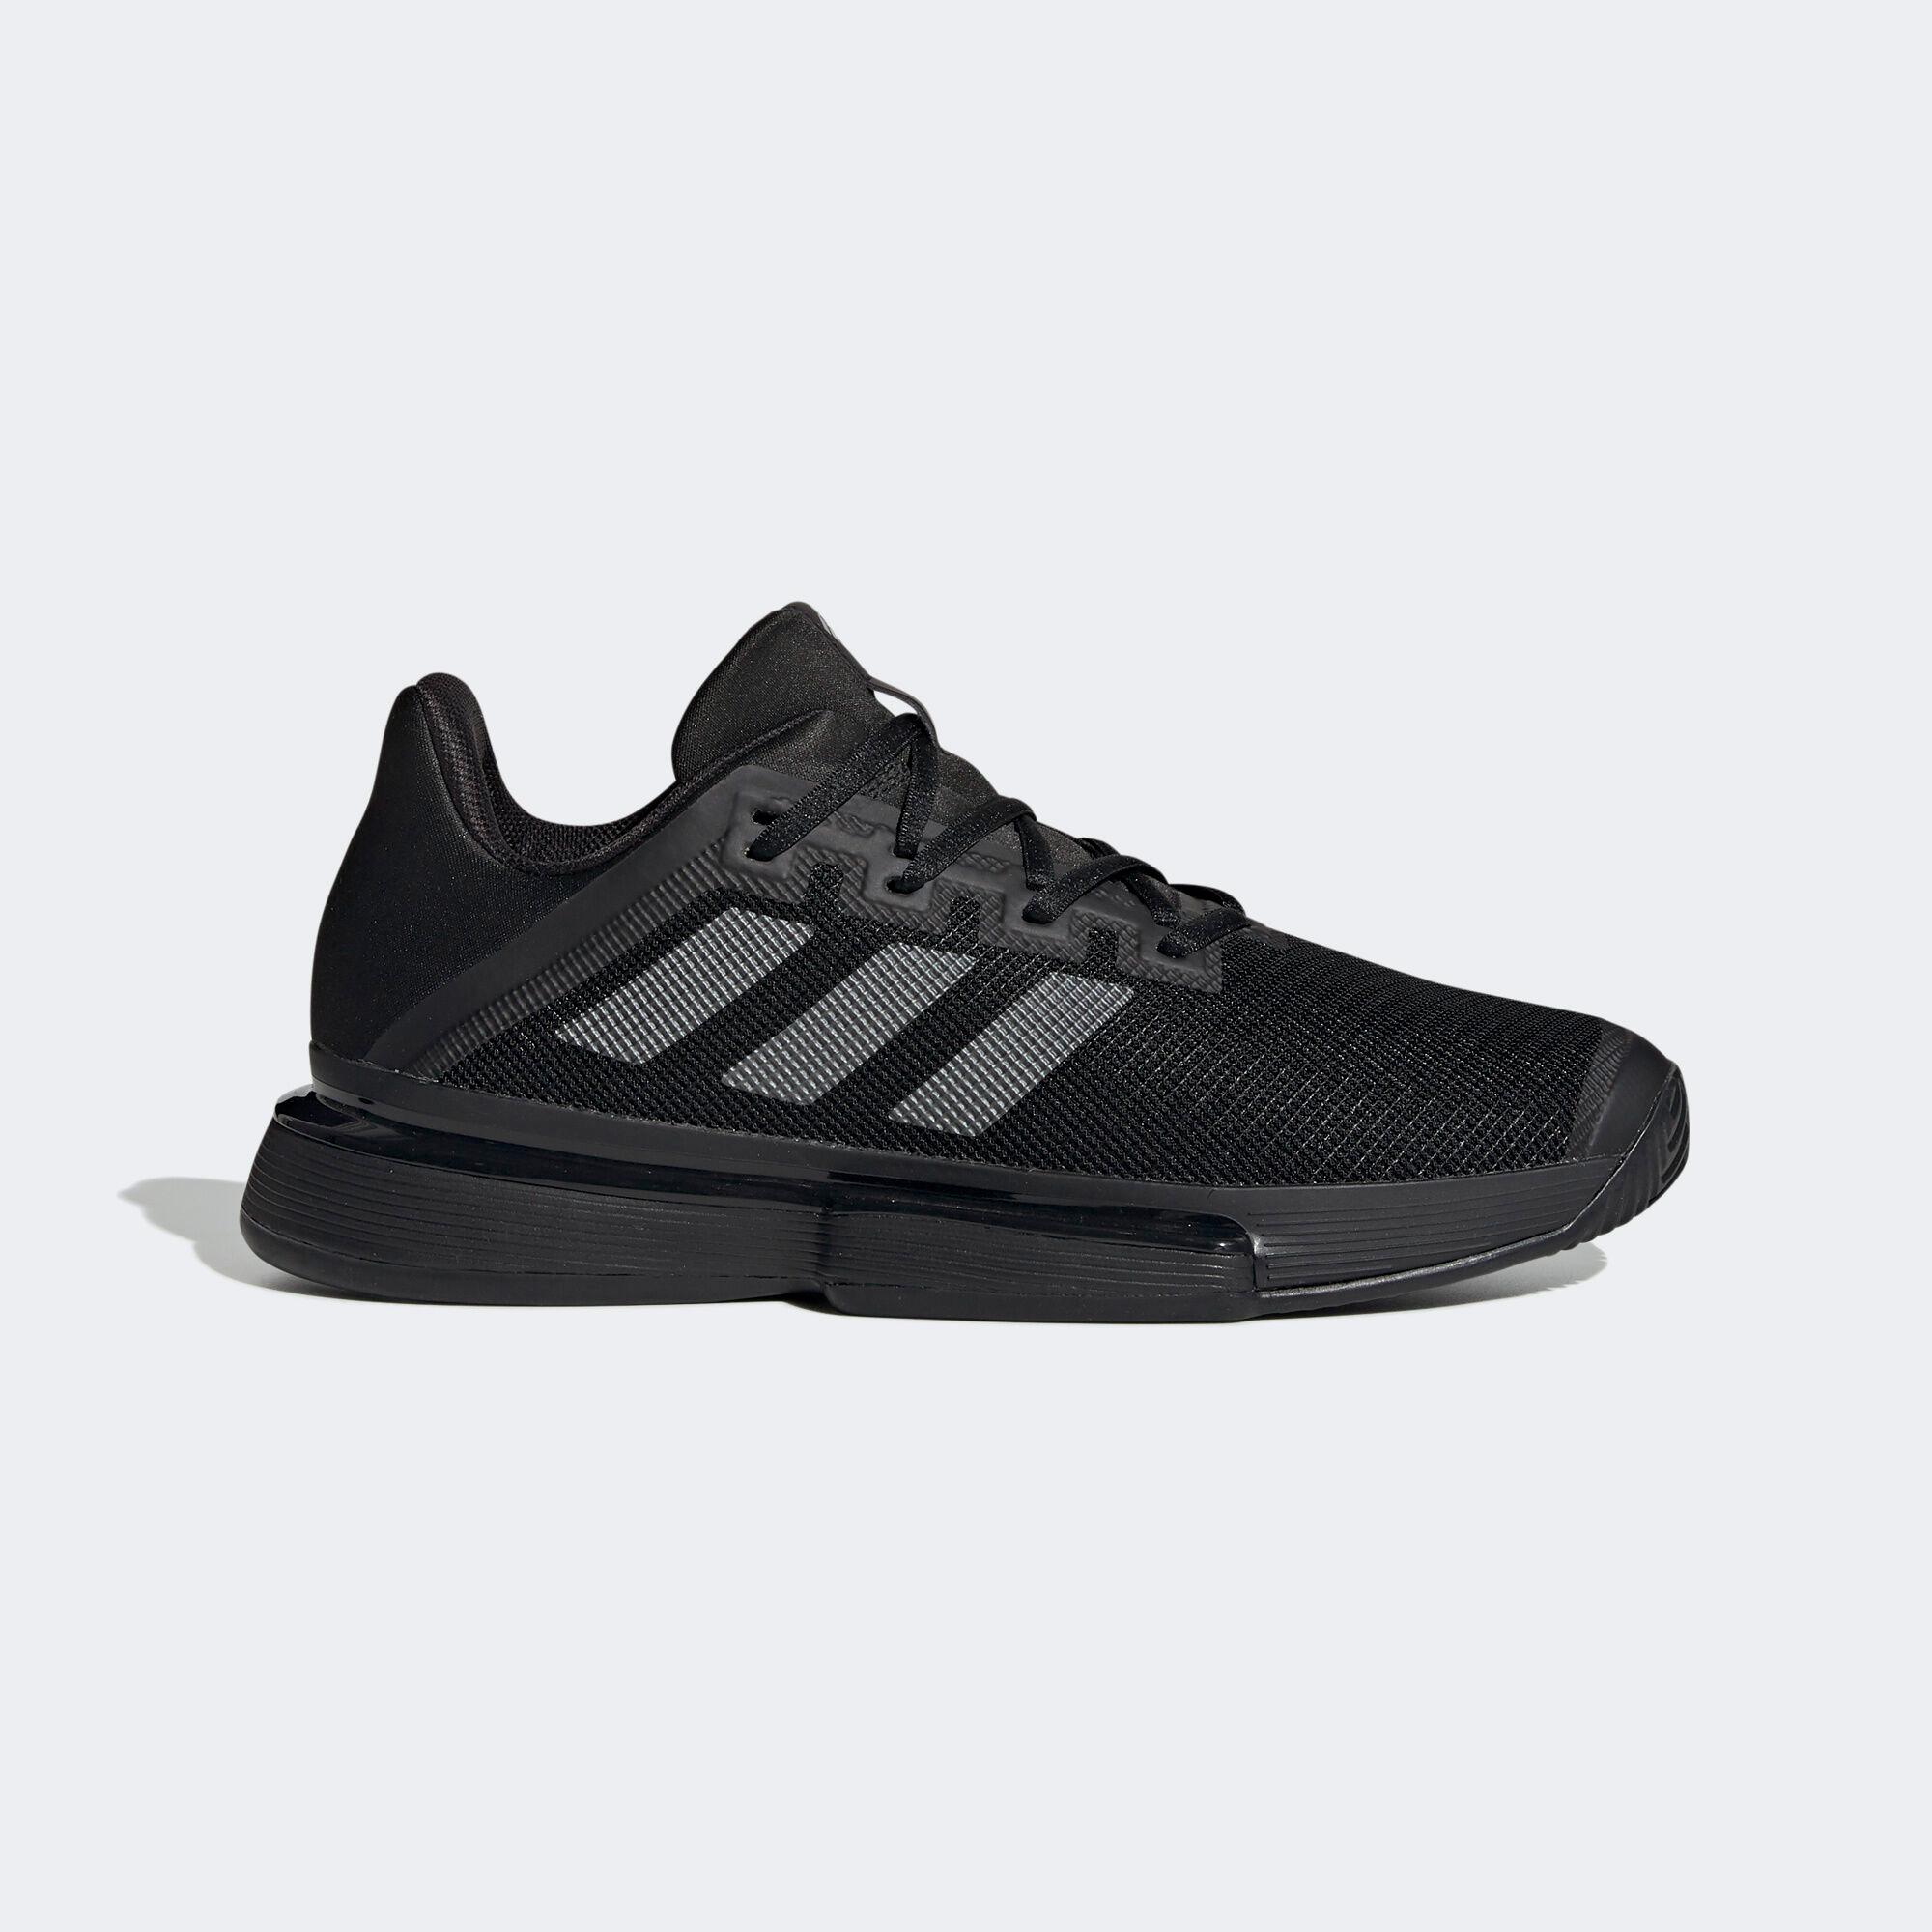 Adidas Mens SoleMatch Bounce Tennis Shoes - Black - Tennisnuts.com